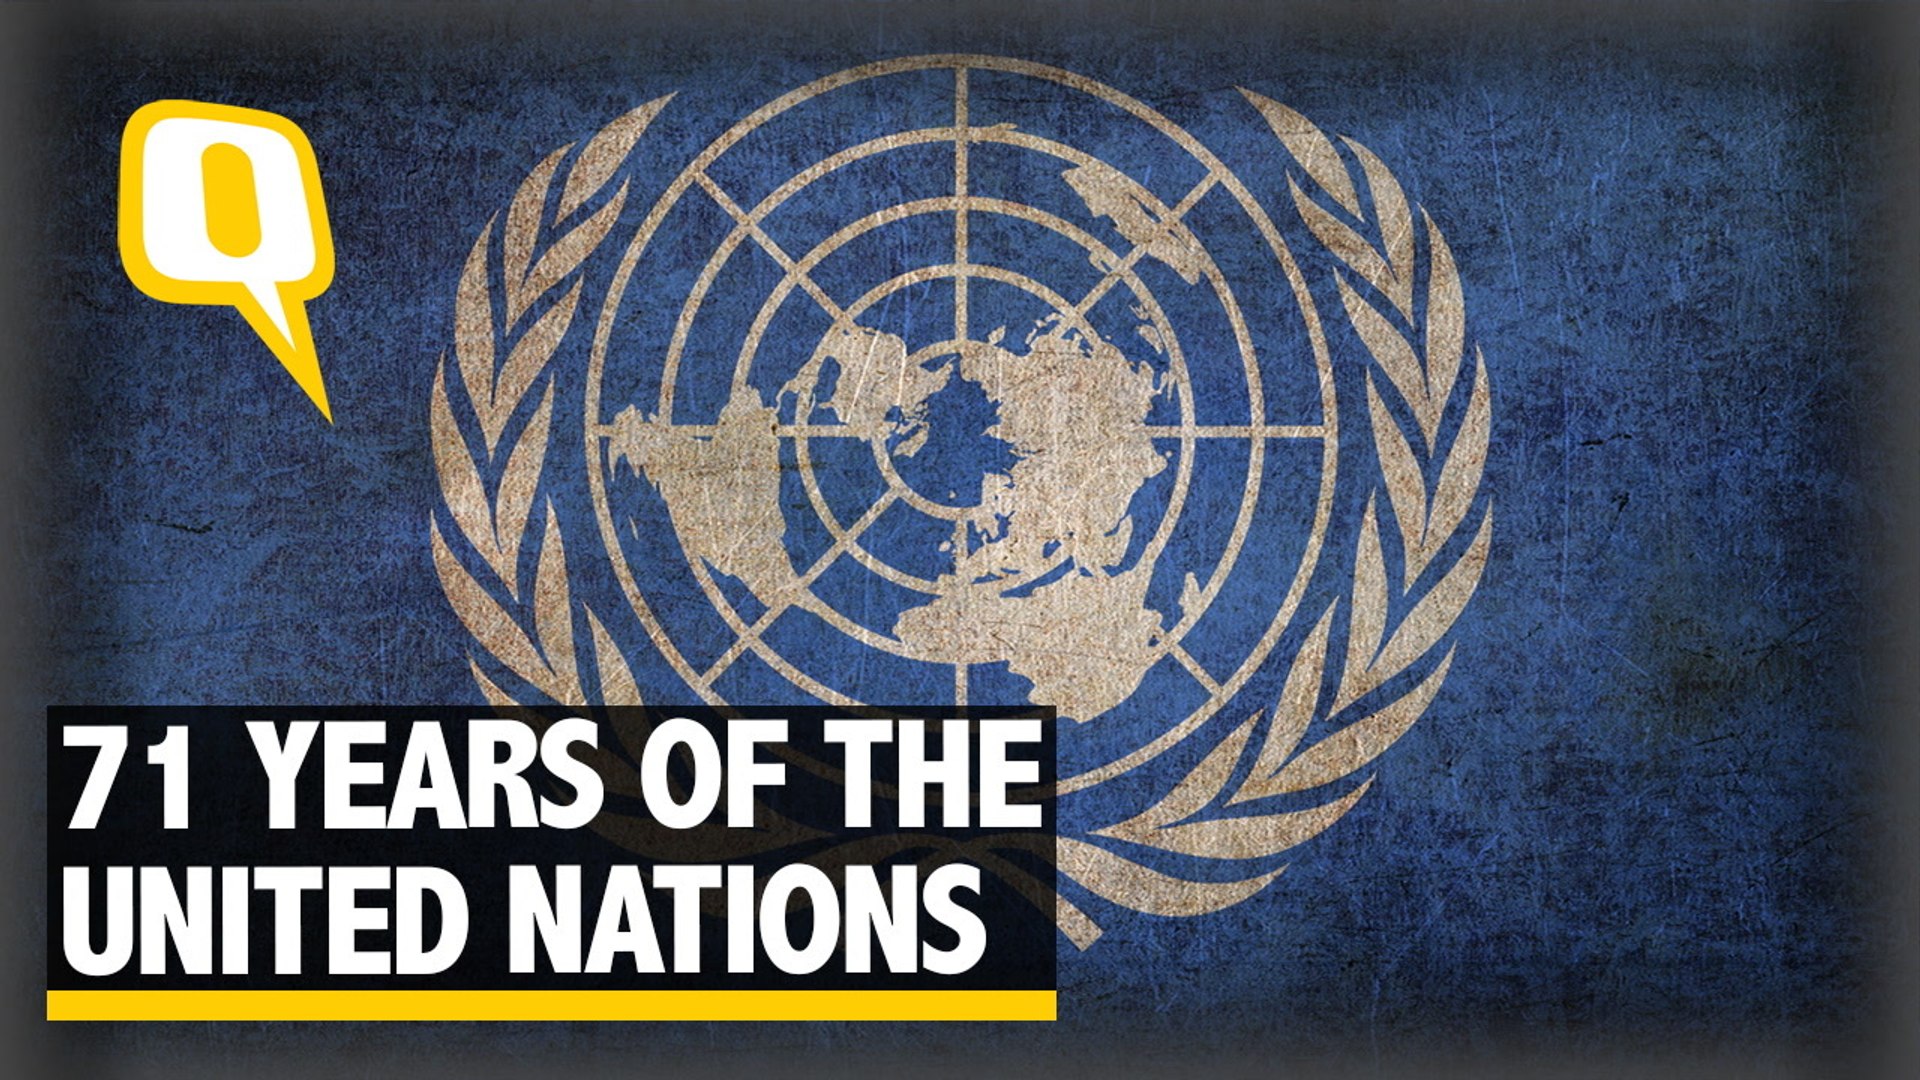 united nations organisation